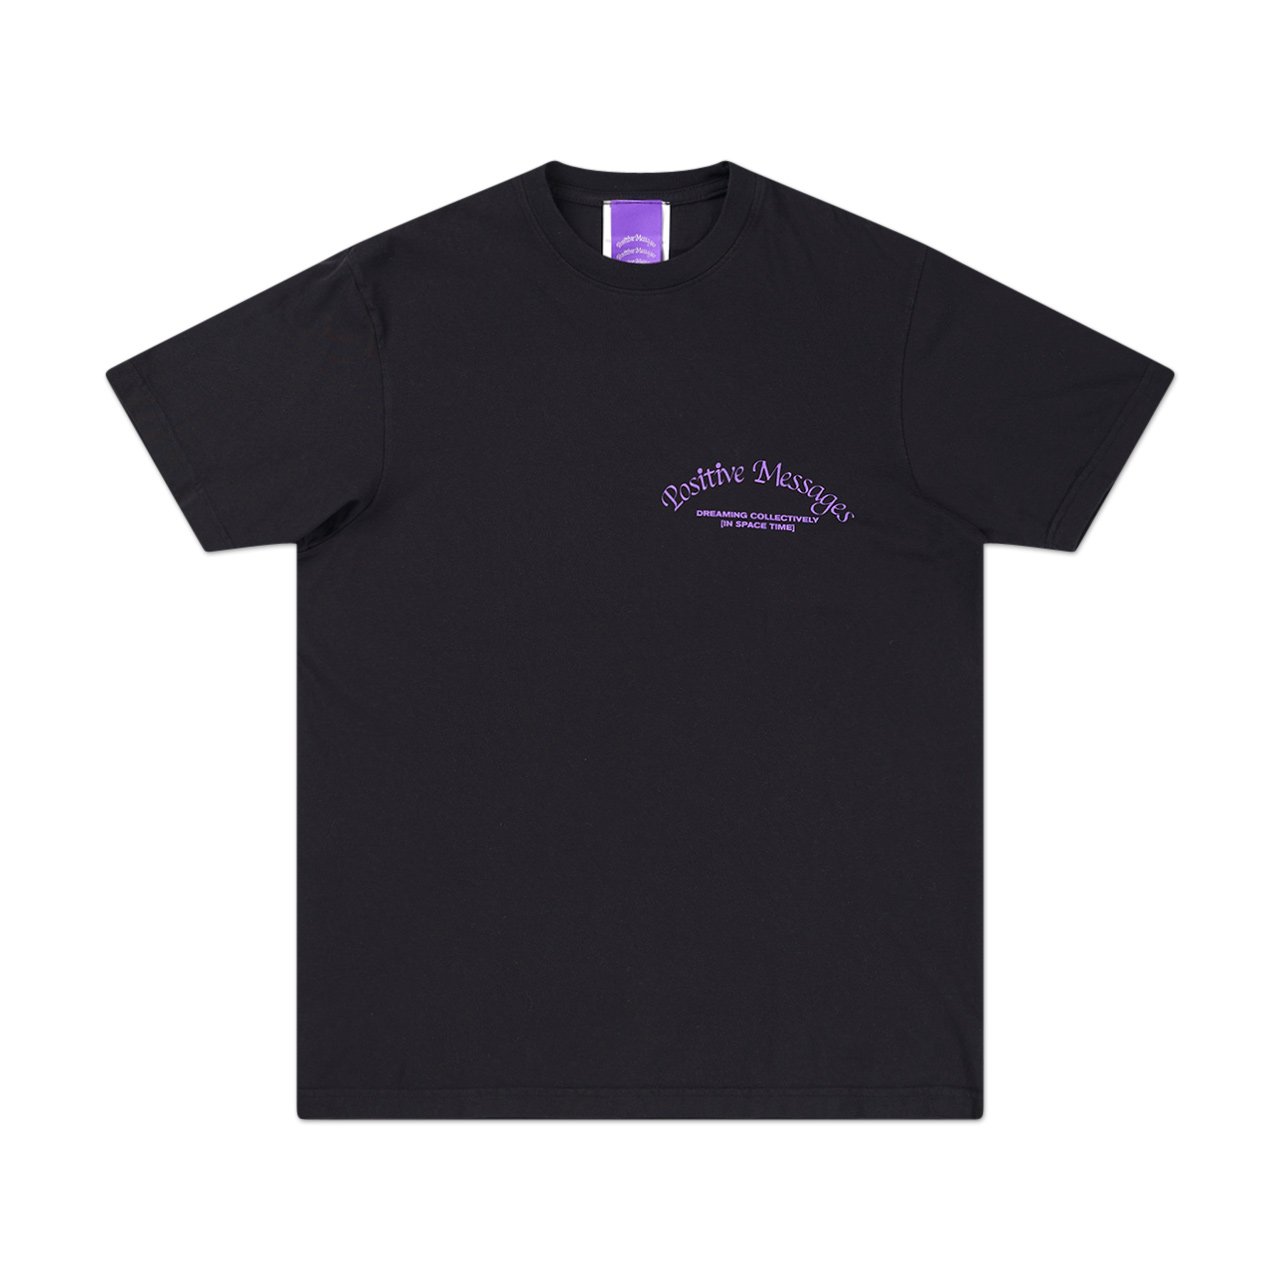 perks and mini perks and mini poz mez collective dreaming s/s t-shirt (black)